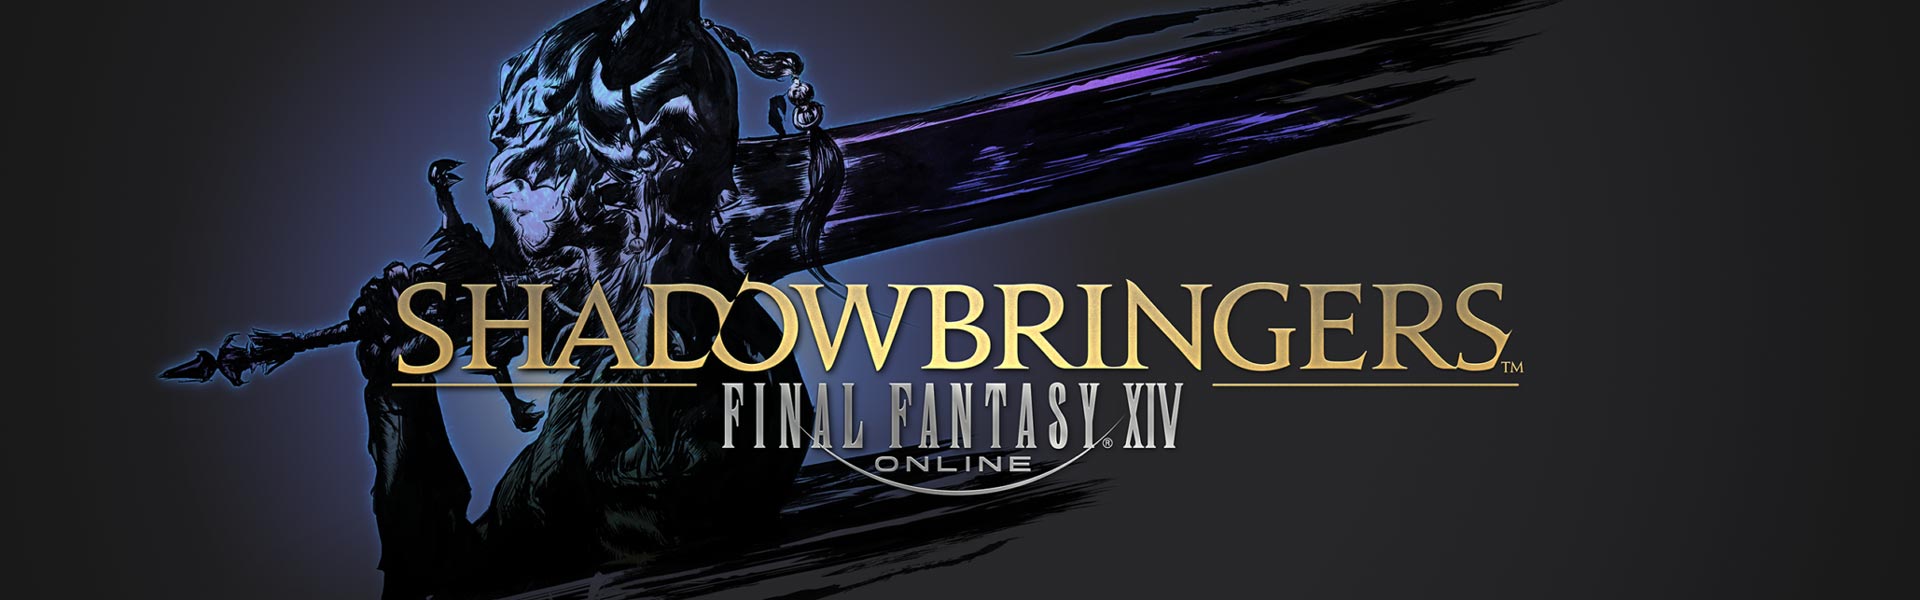 Final Fantasy XIV 14 Online Complete Edition PC Digital Code Europe,MMORC.COM